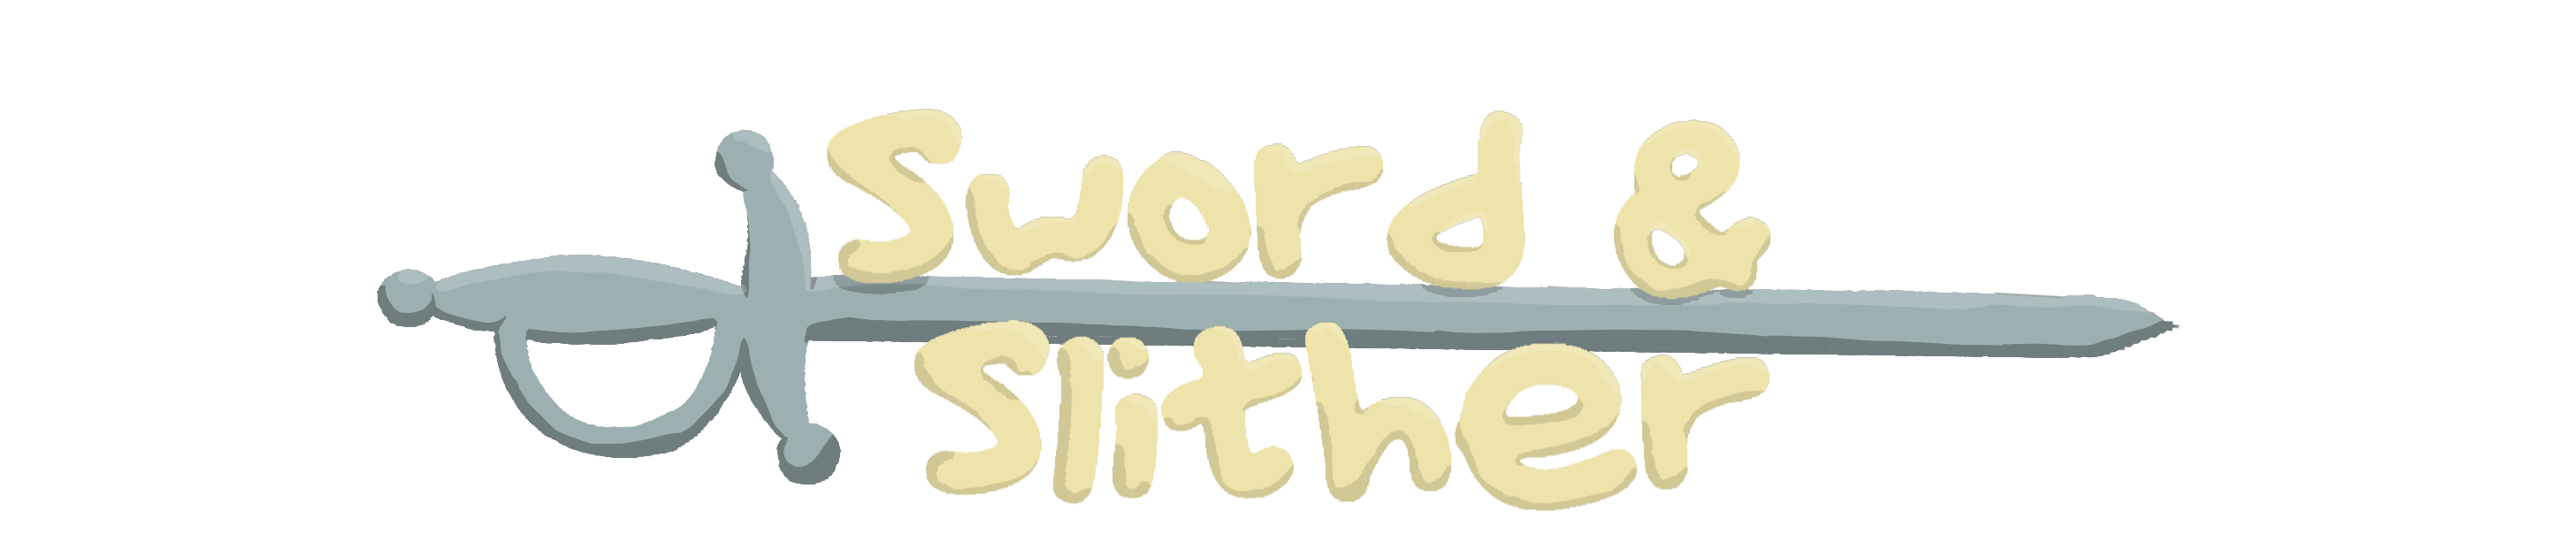 Sword & Slither